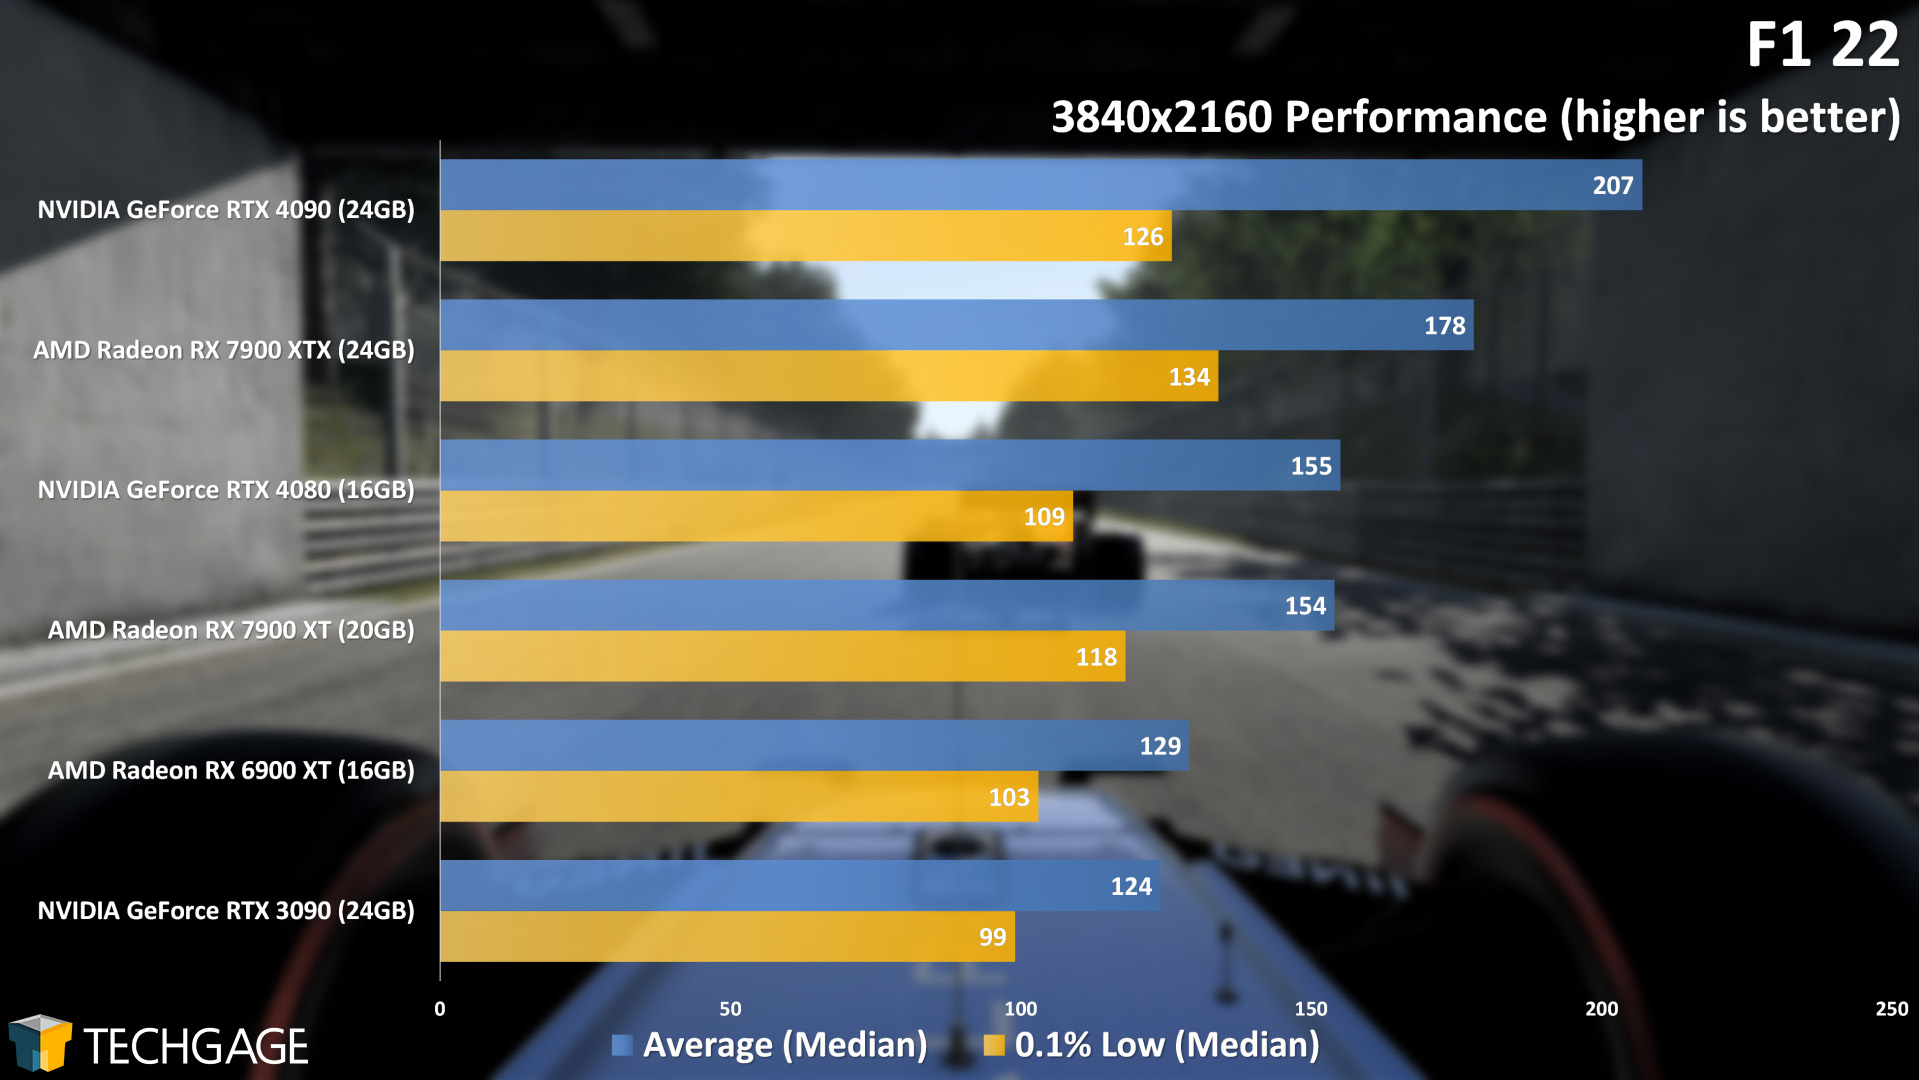 F1 22 4K Performance (AMD Radeon RX 7900 XT and XTX)